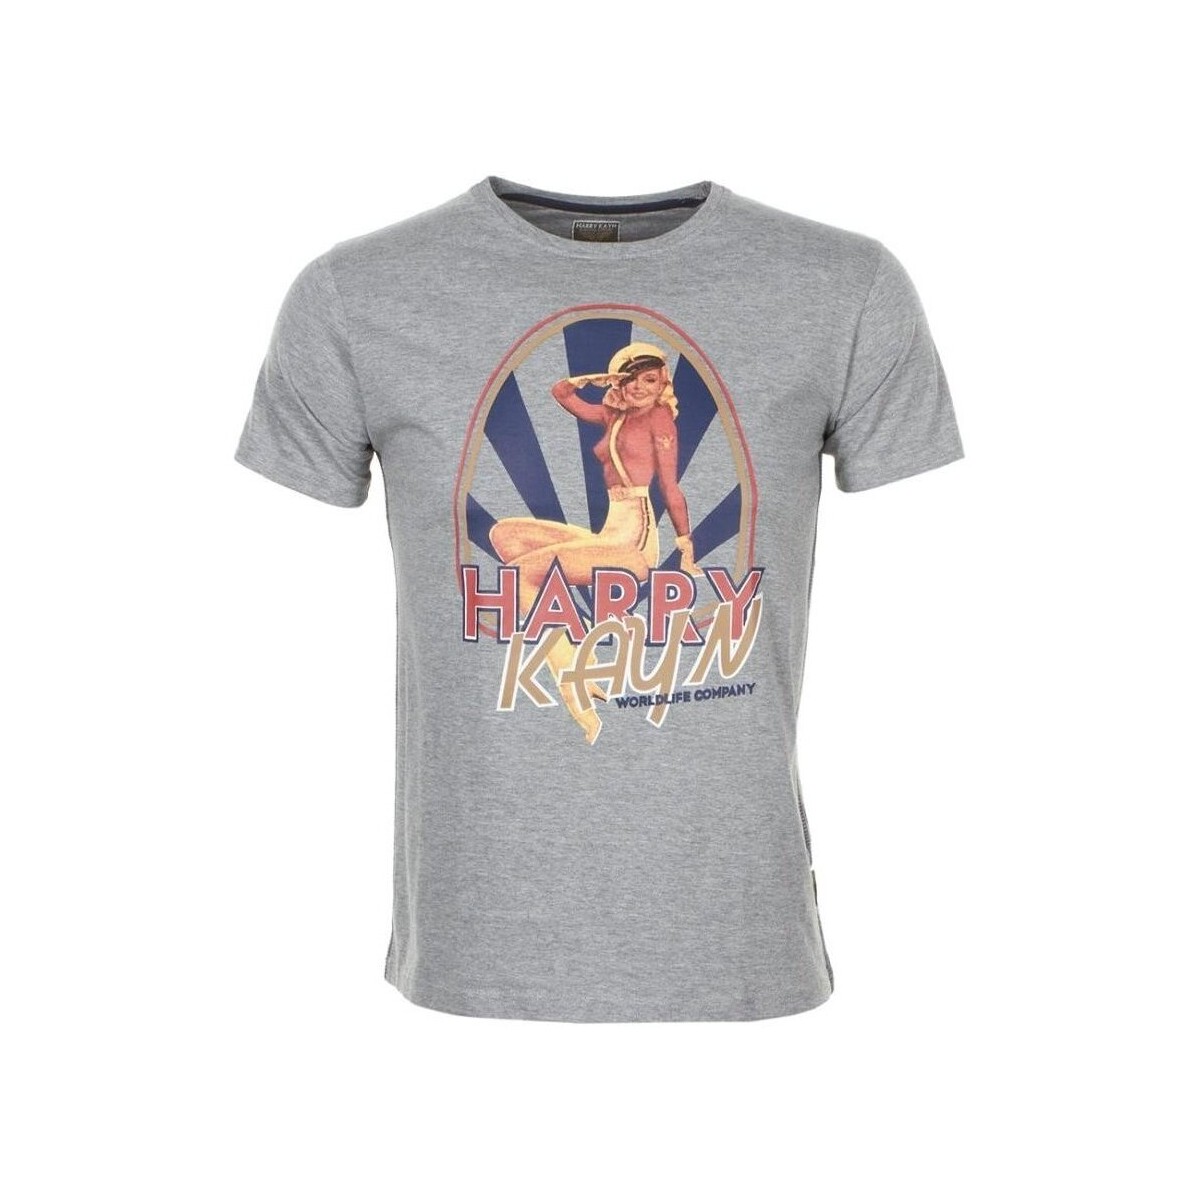 Textil Rapaz T-Shirt mangas curtas Harry Kayn T-shirt manches courtes garçon ECELINUP Marinho